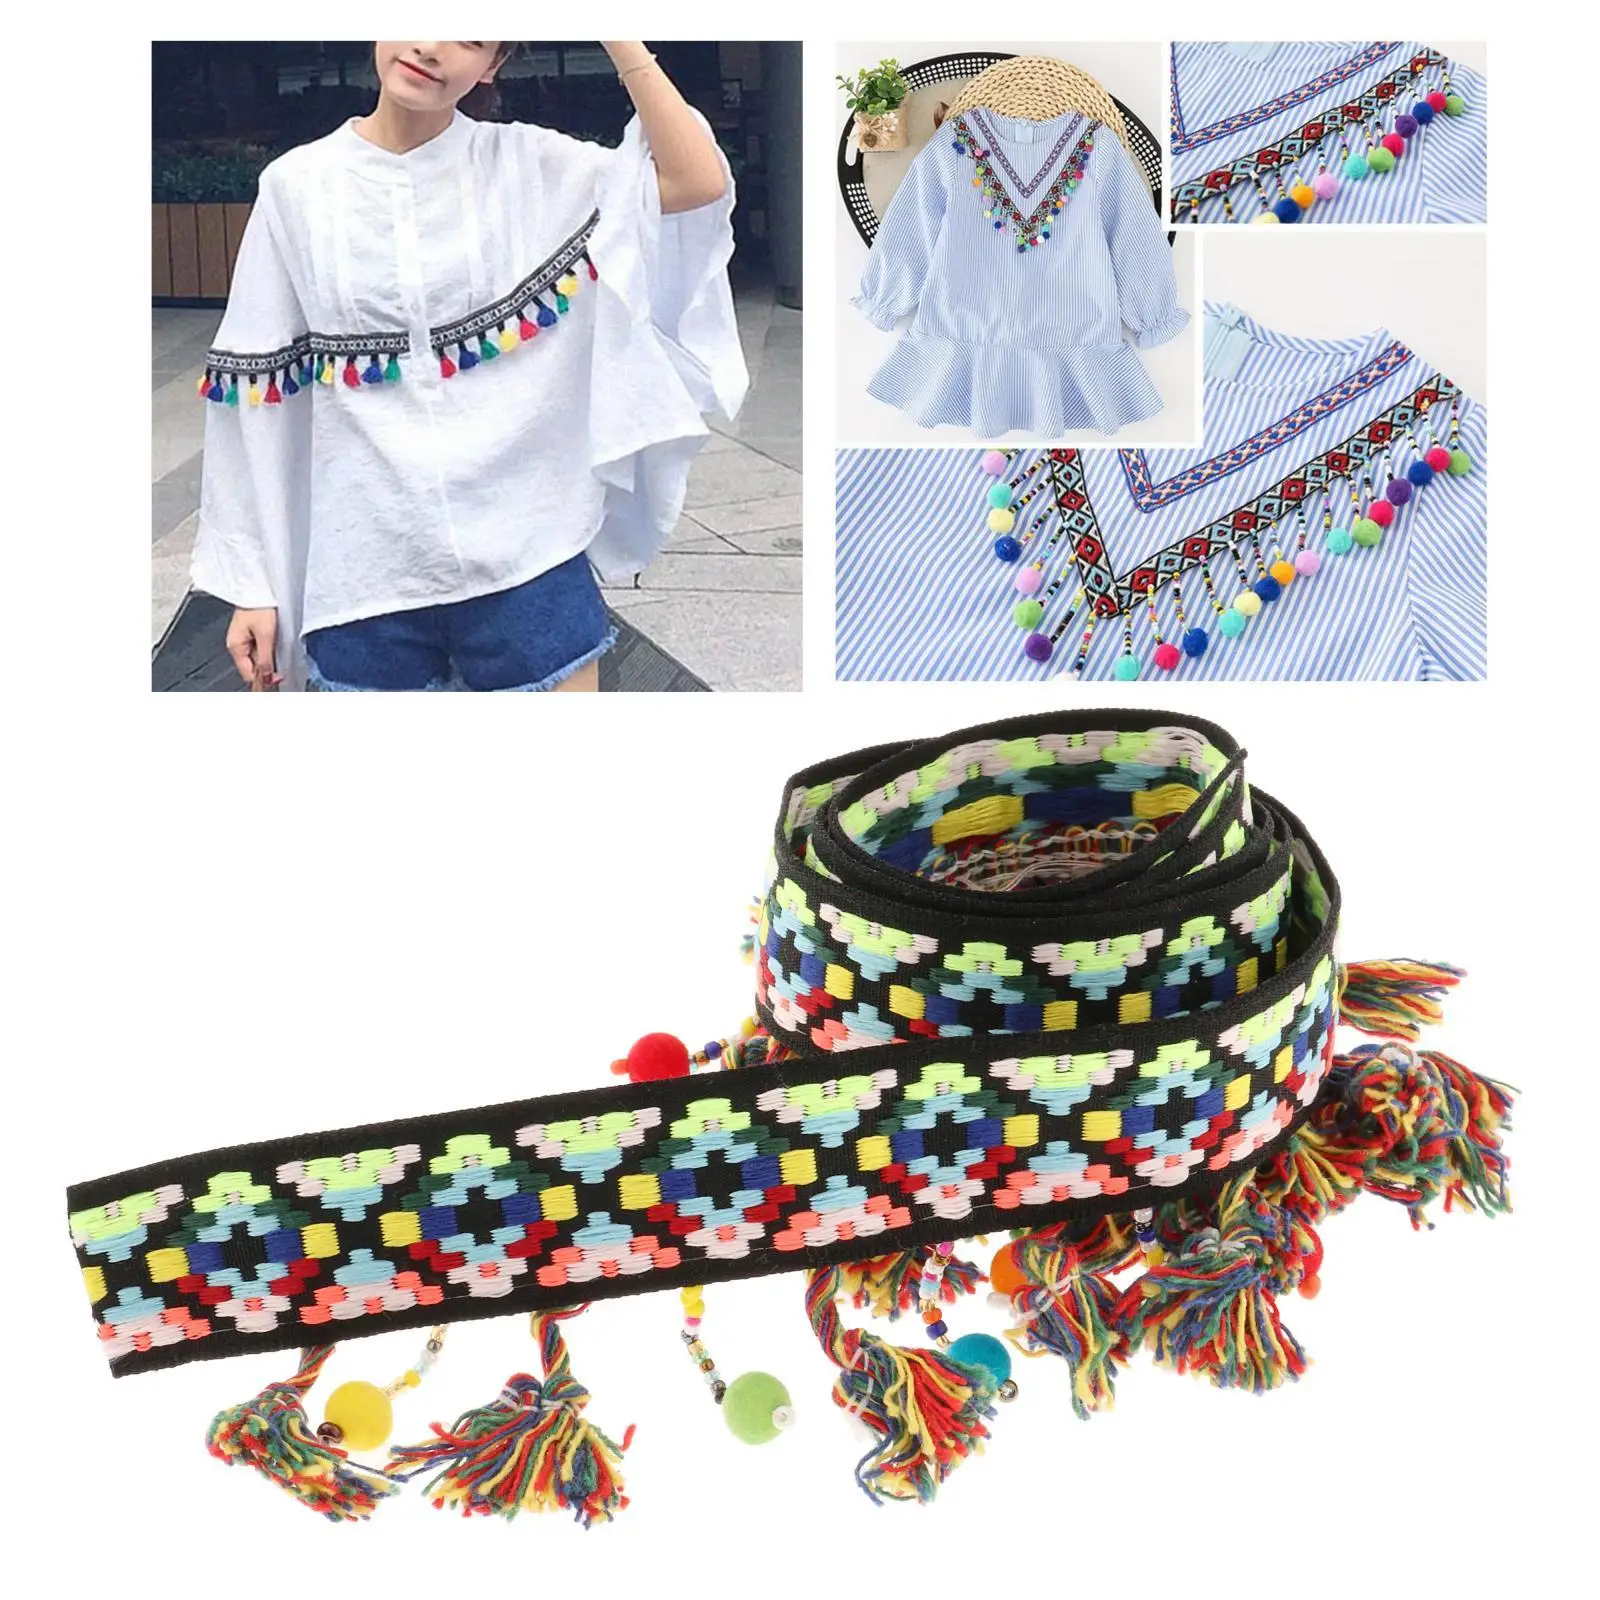 Colorful Tassel Embroidered Lace Trim 2.5cm Width Vintage Cross Stitch Trim DIY Webbing Trim for Sewing Craft DIY Clothes Belts